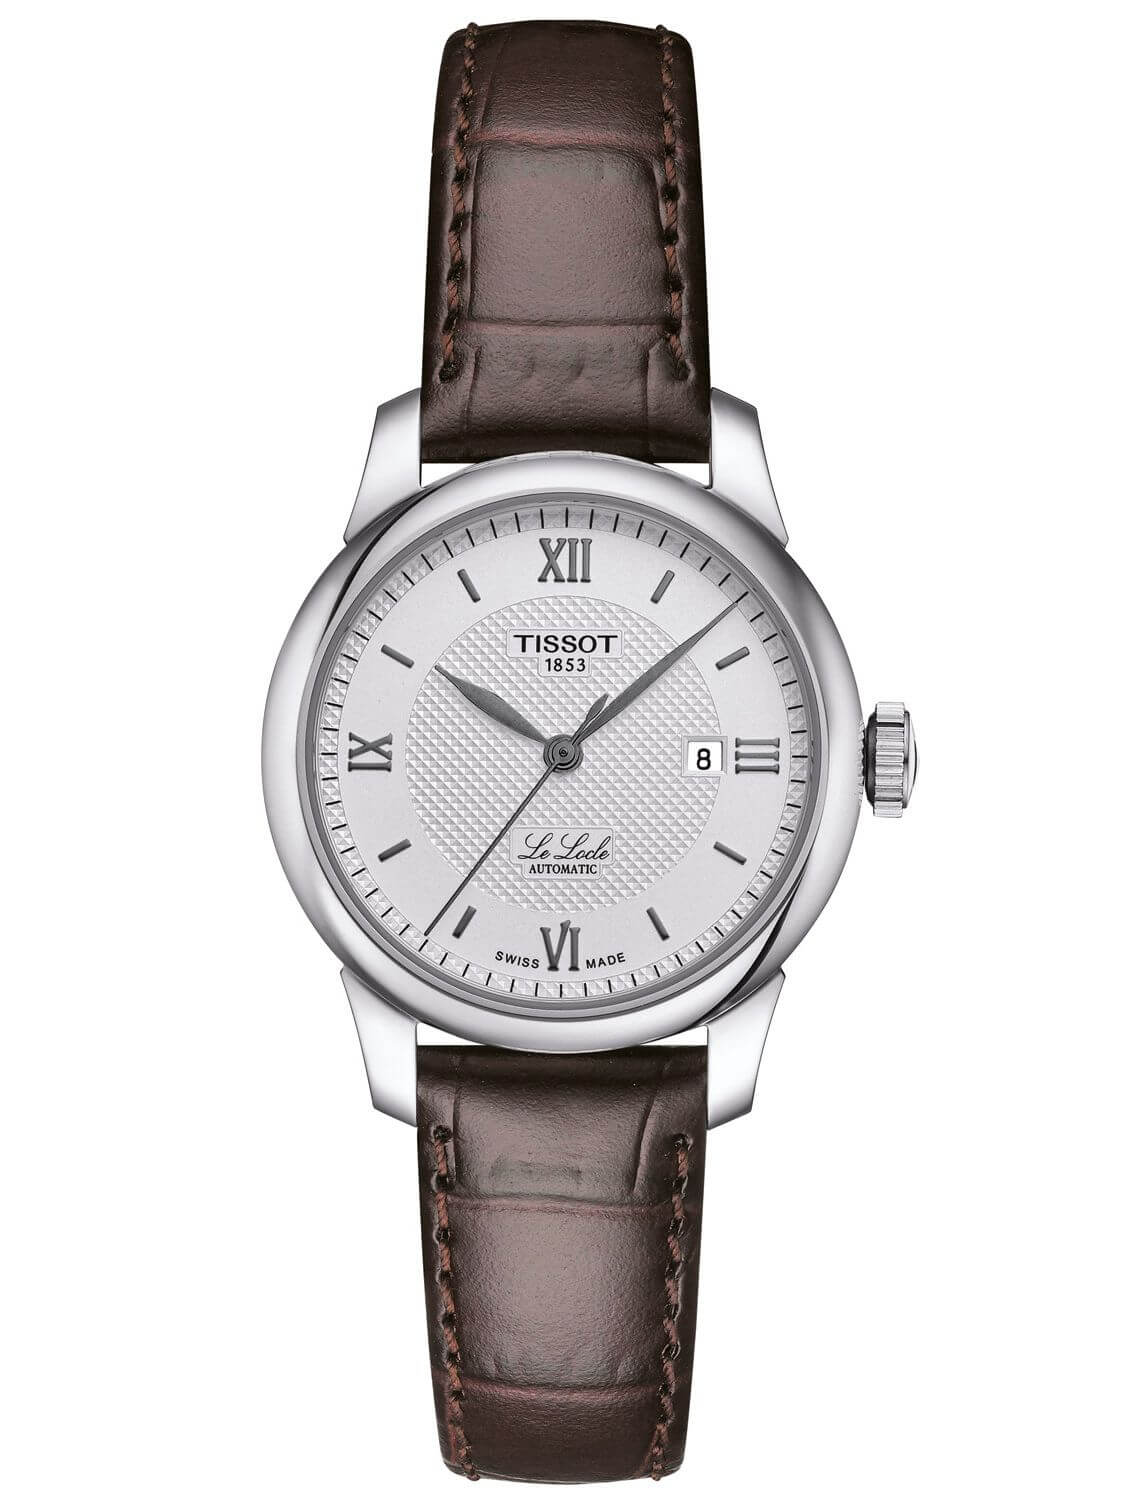 Tissot Le Locle (29.00) Automatic Women's Watch T0062071603800